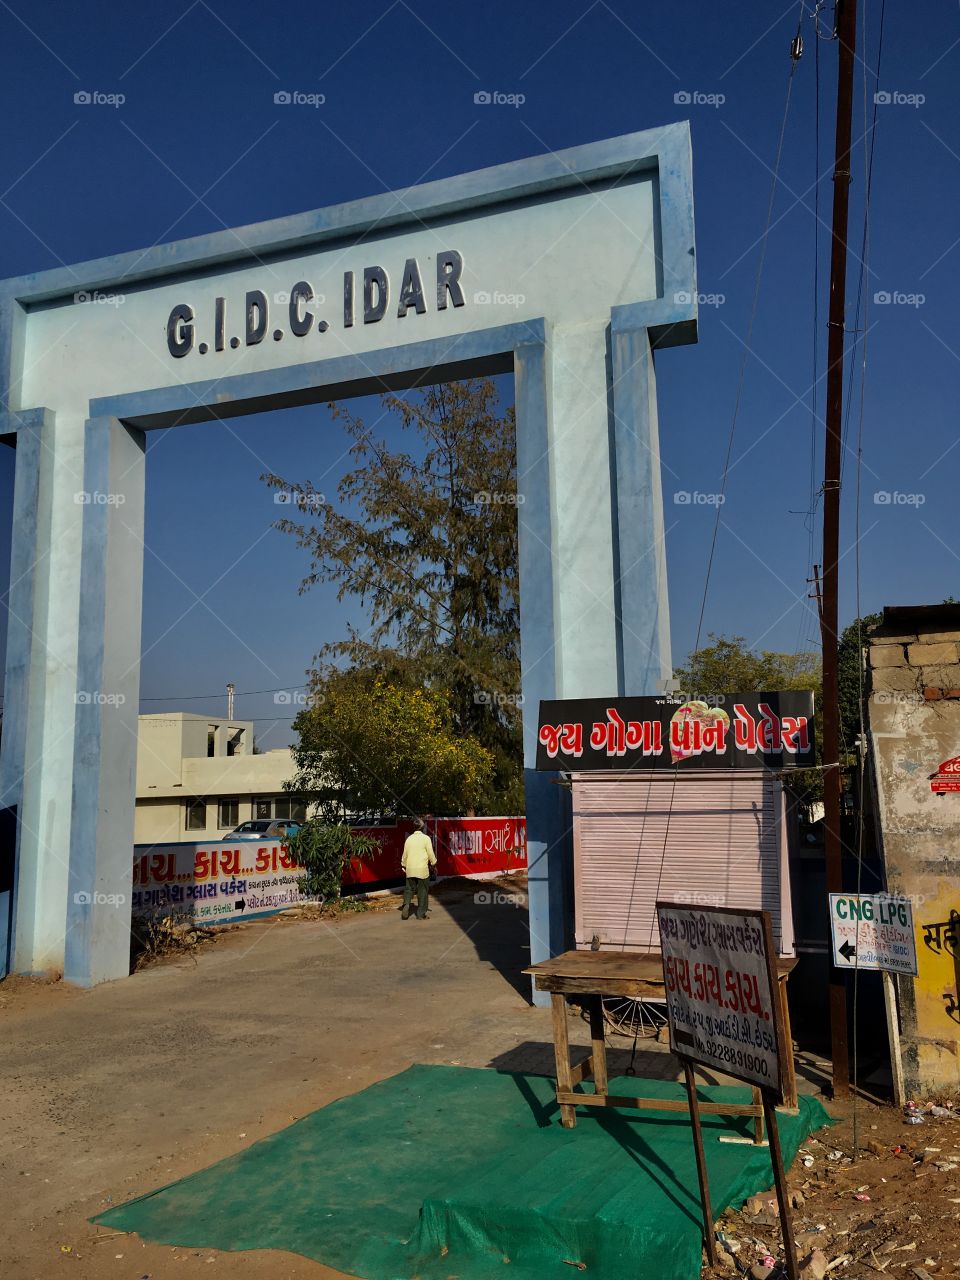 Entrance gate of Gujarat Industrial development co Idar north Gujarat india